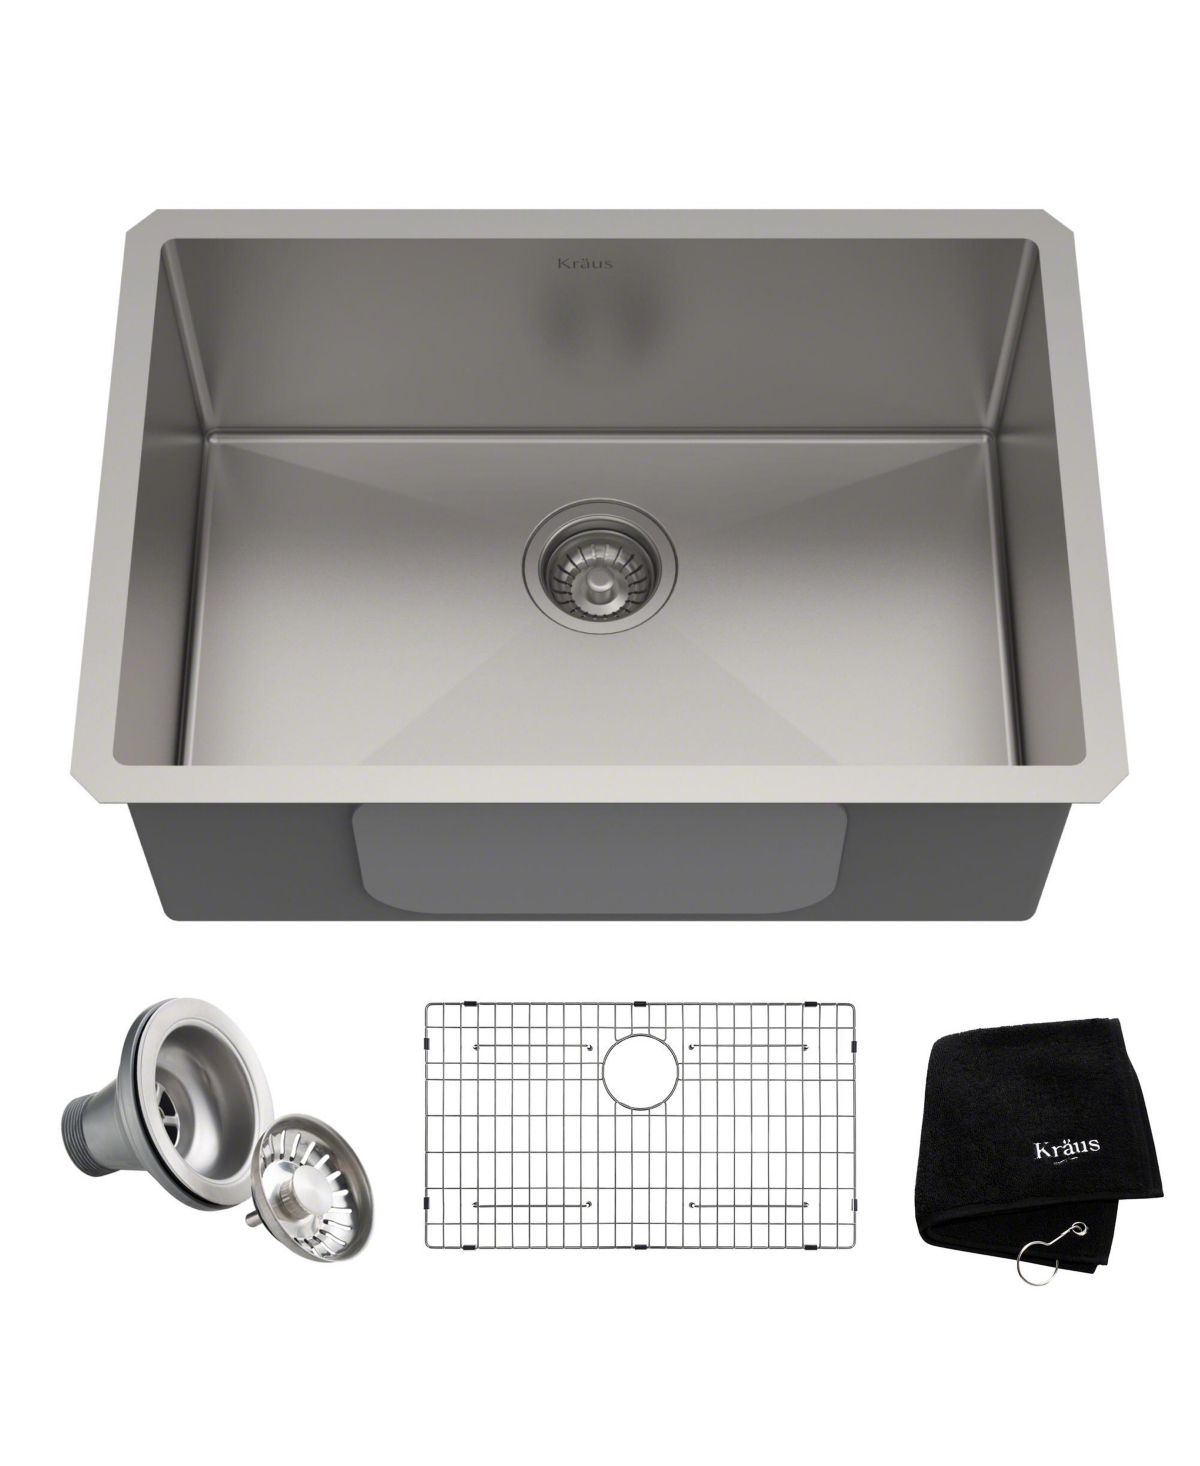 Standart Pro 26 in. 16 Gauge Undermount Single Bowl Stainless Steel Kitchen Sink - Stainless steel